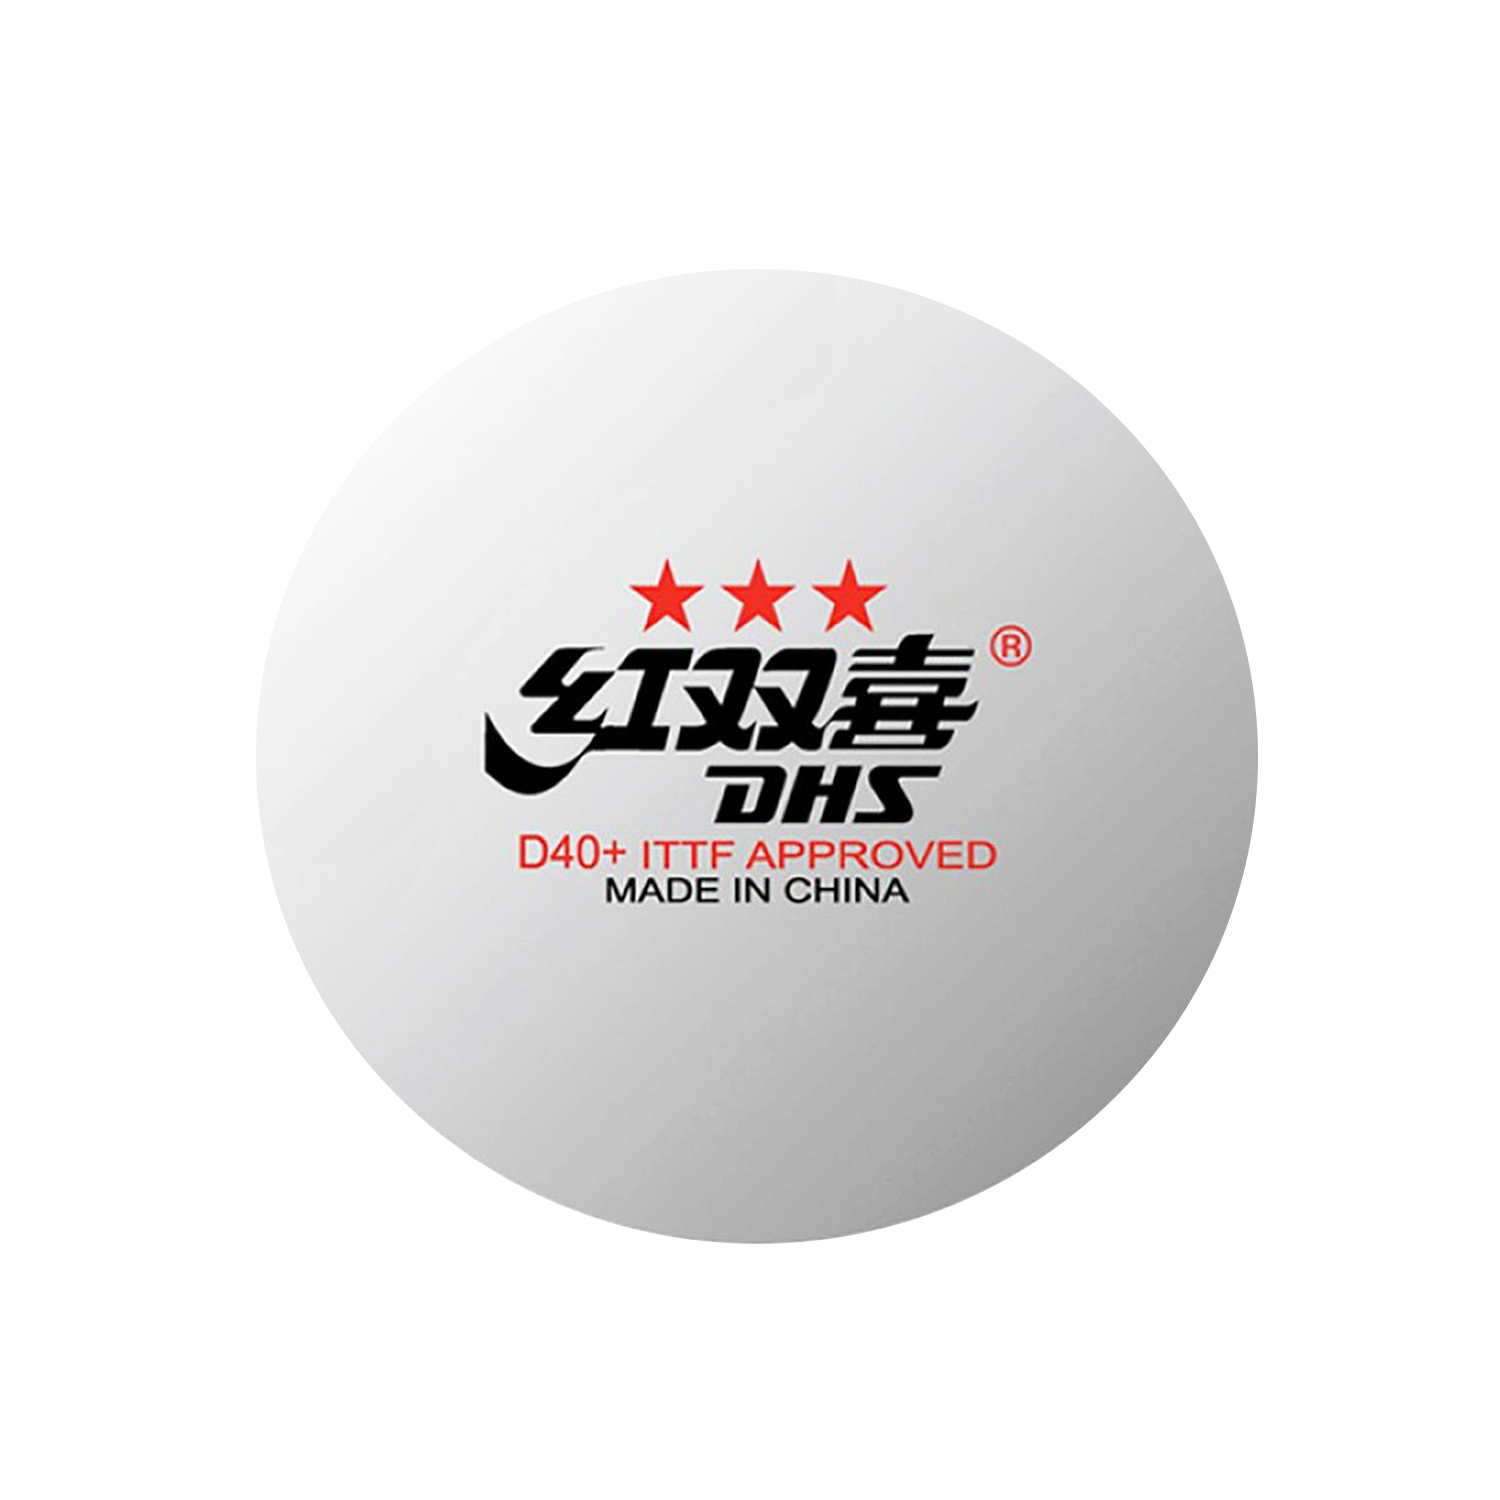 Мячи для настольного тенниса DHS 40+ 3 звезды